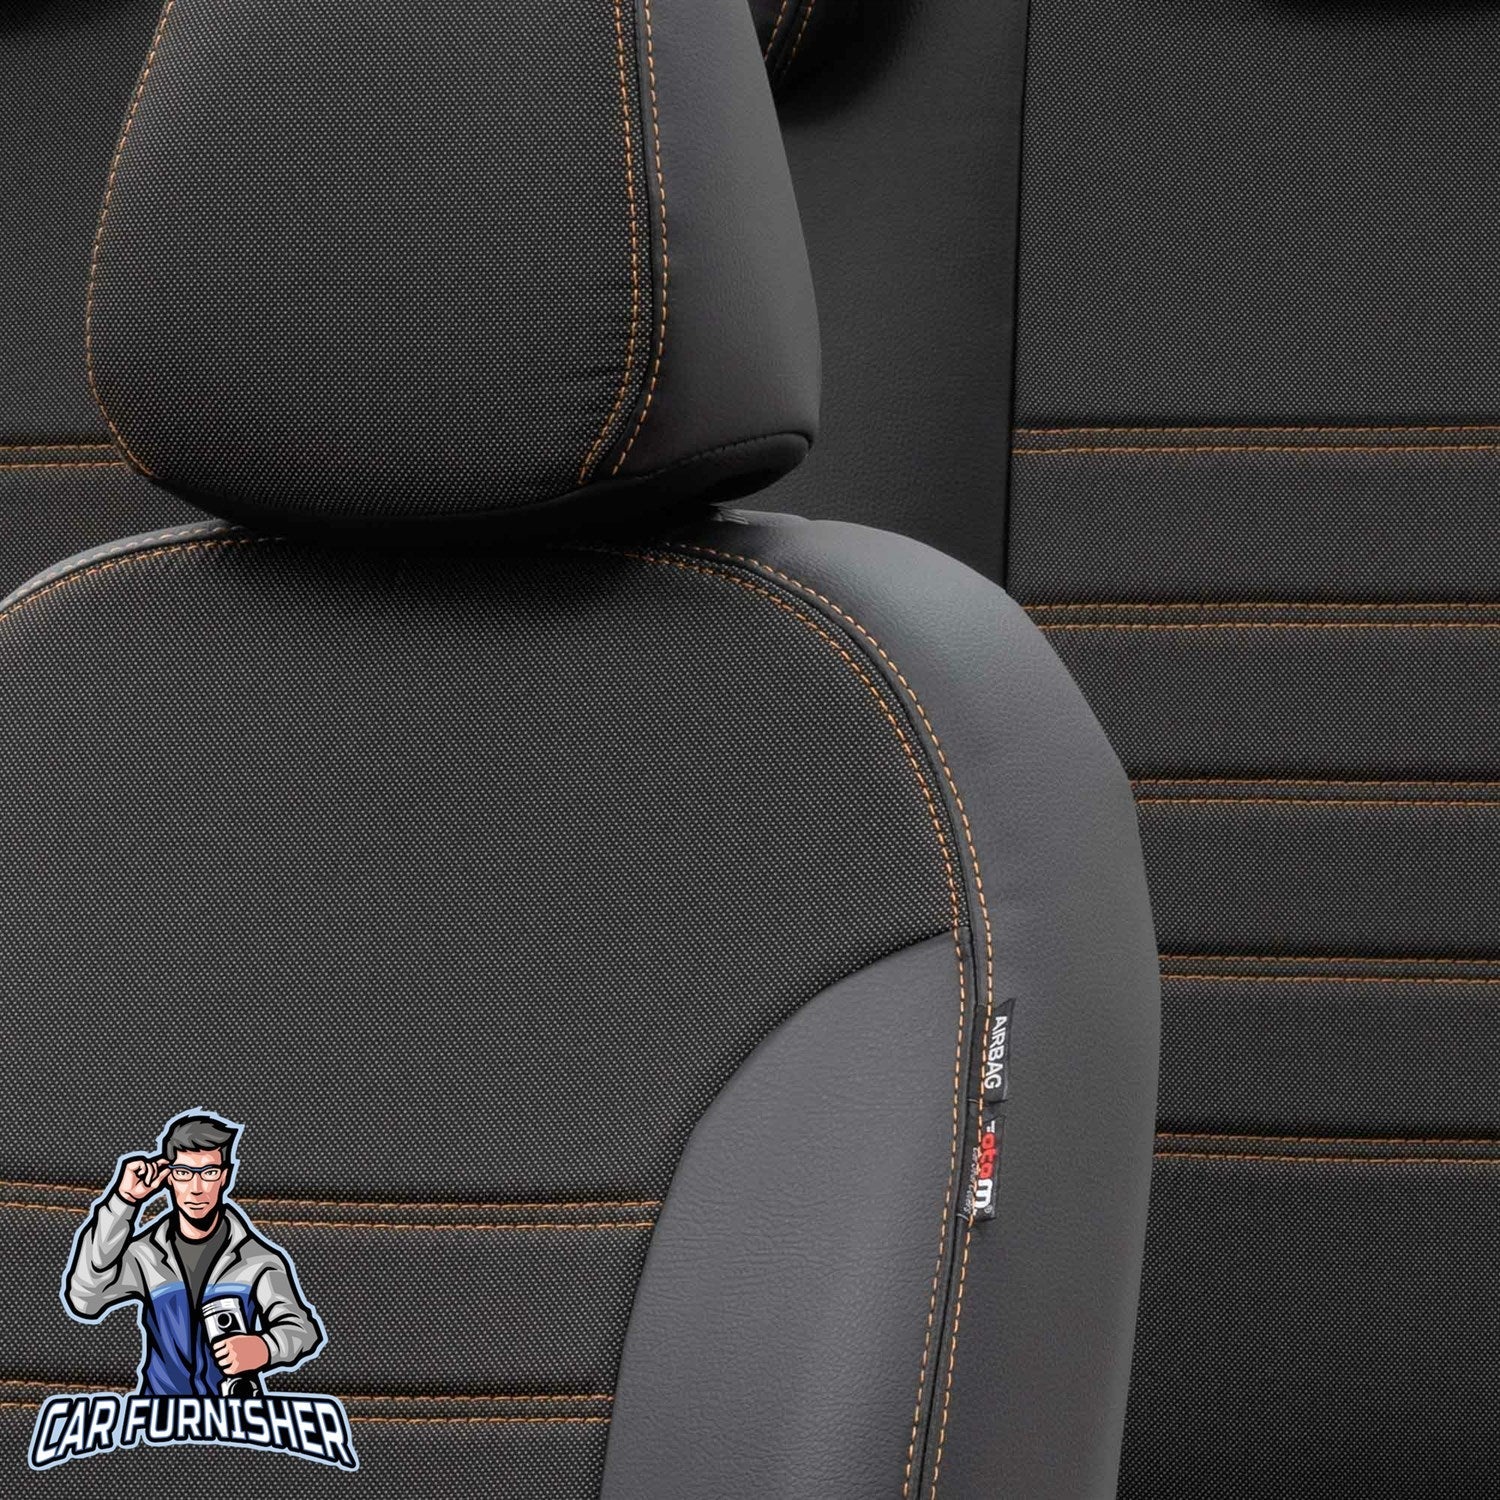 Kia Stonic Seat Covers Paris Leather & Jacquard Design Dark Beige Leather & Jacquard Fabric